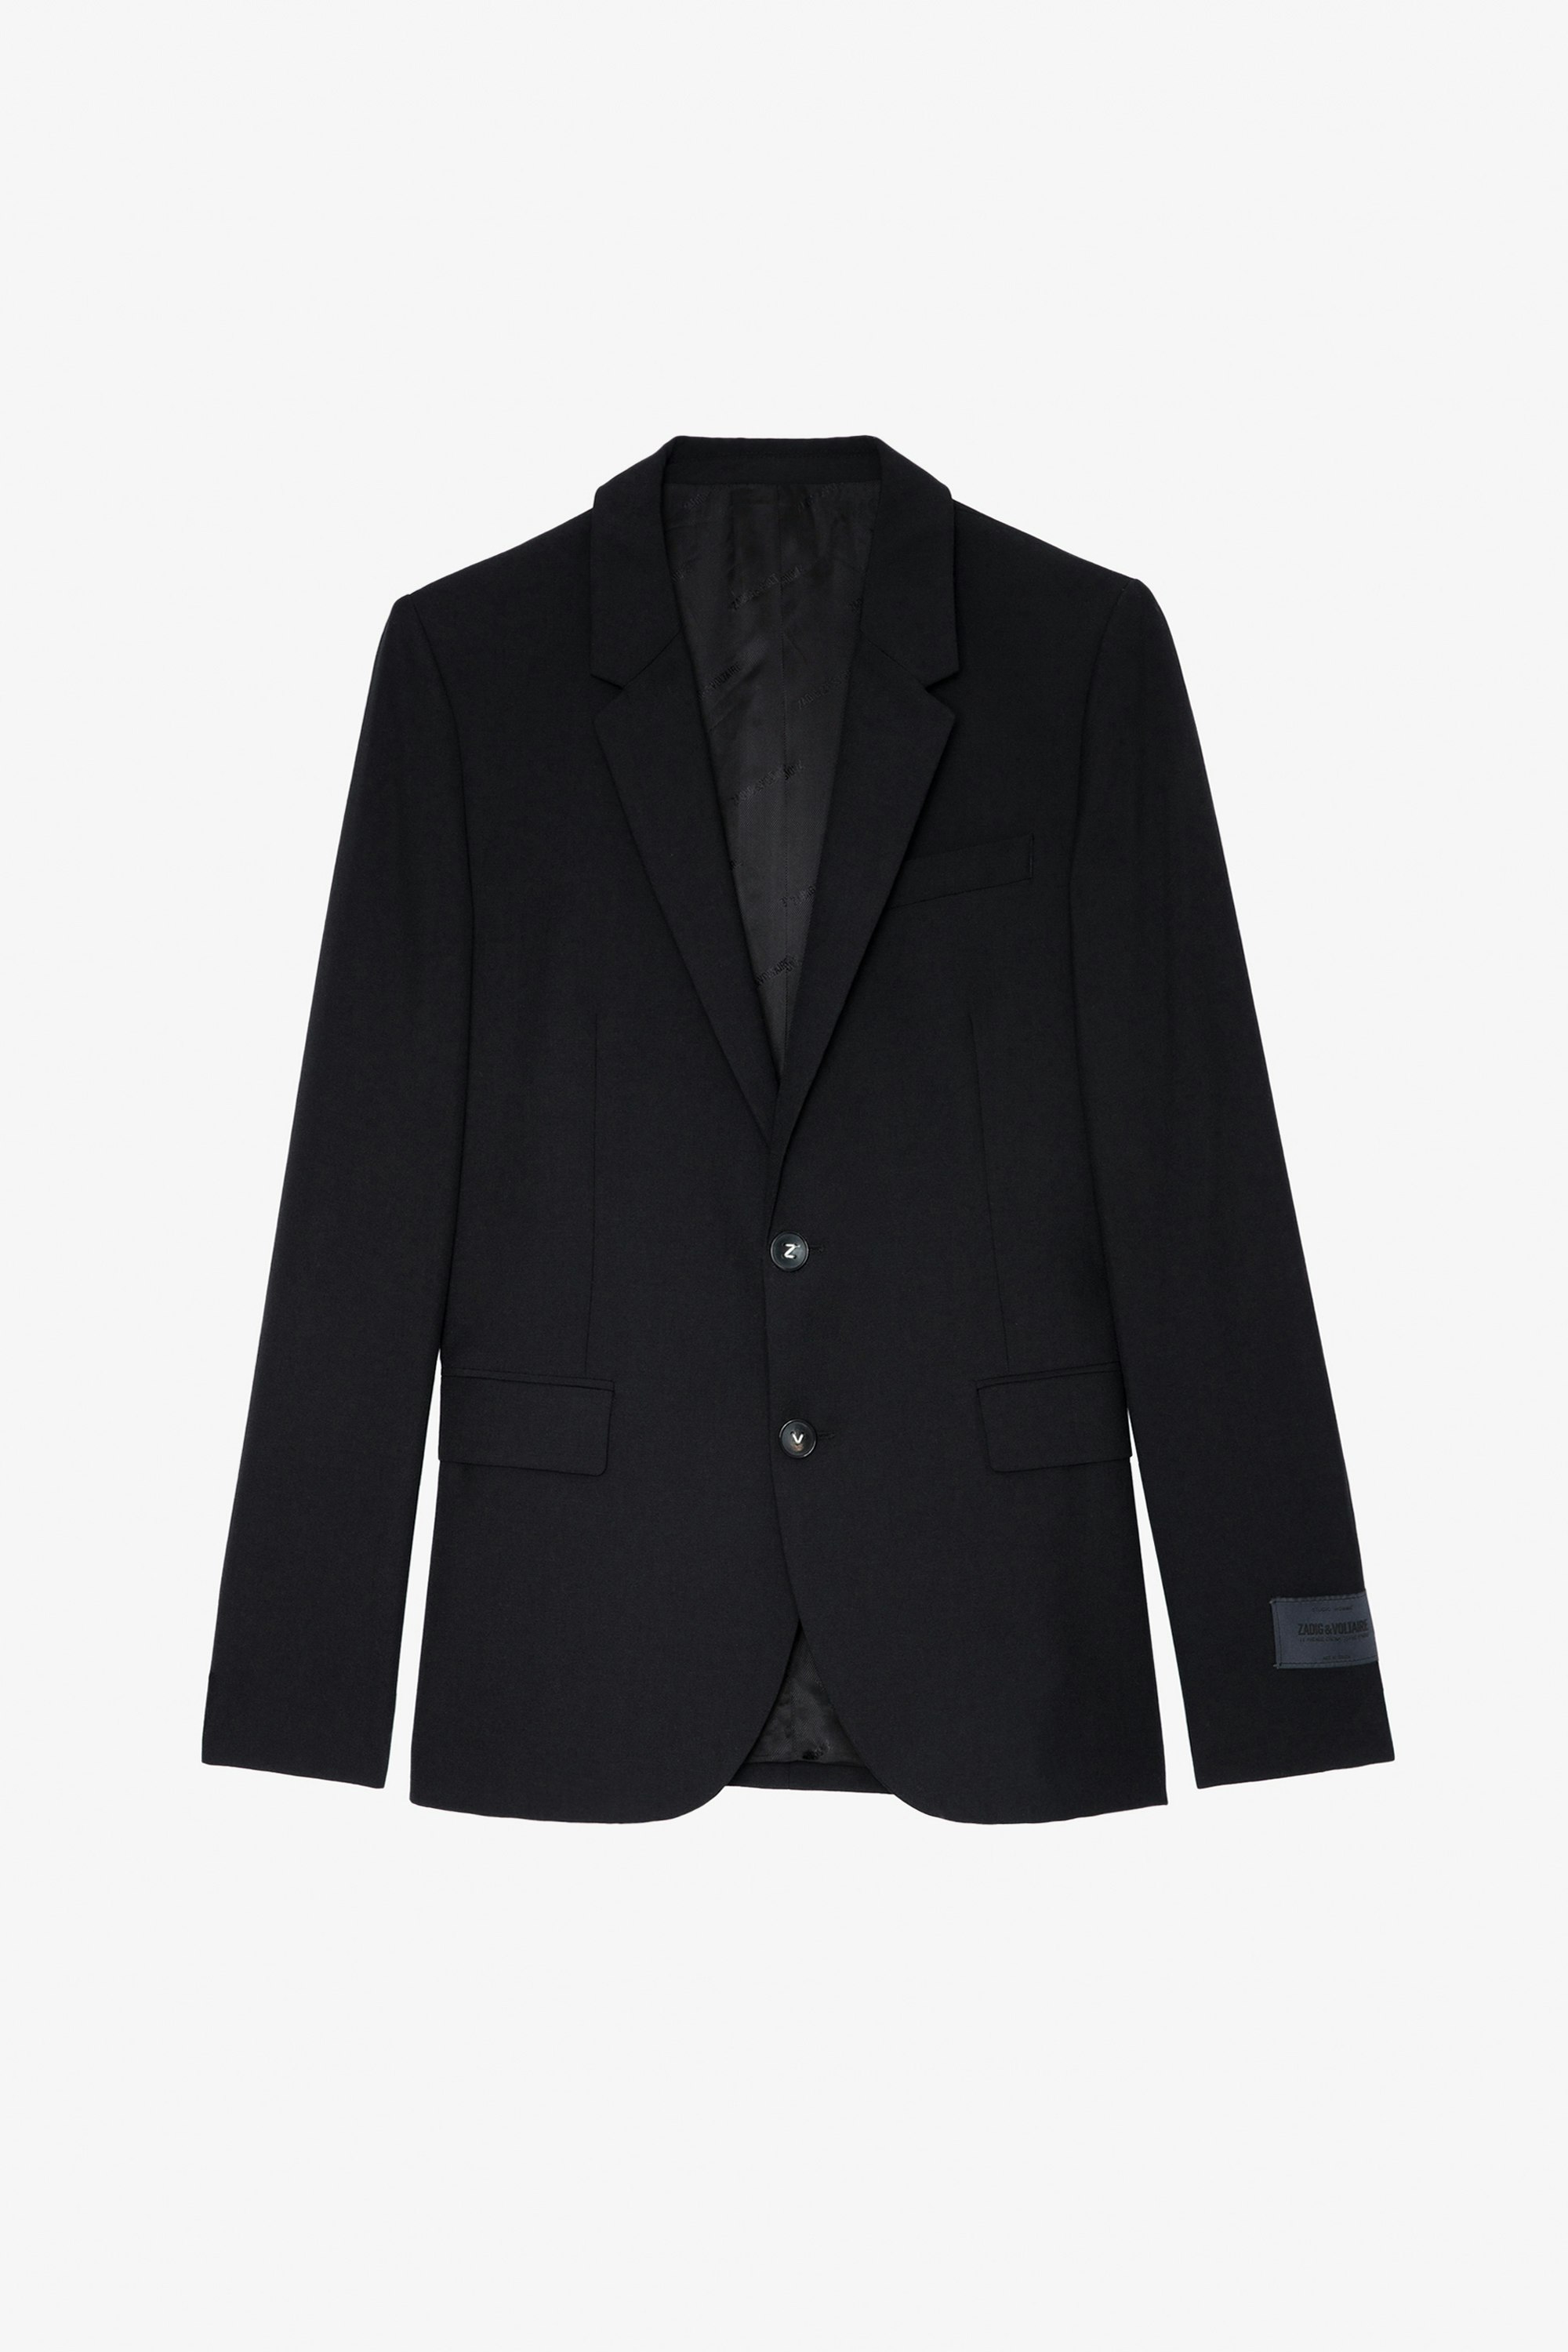 Viks ジャケット - Unisex's black wool blazer with studio insignia on left sleeve.